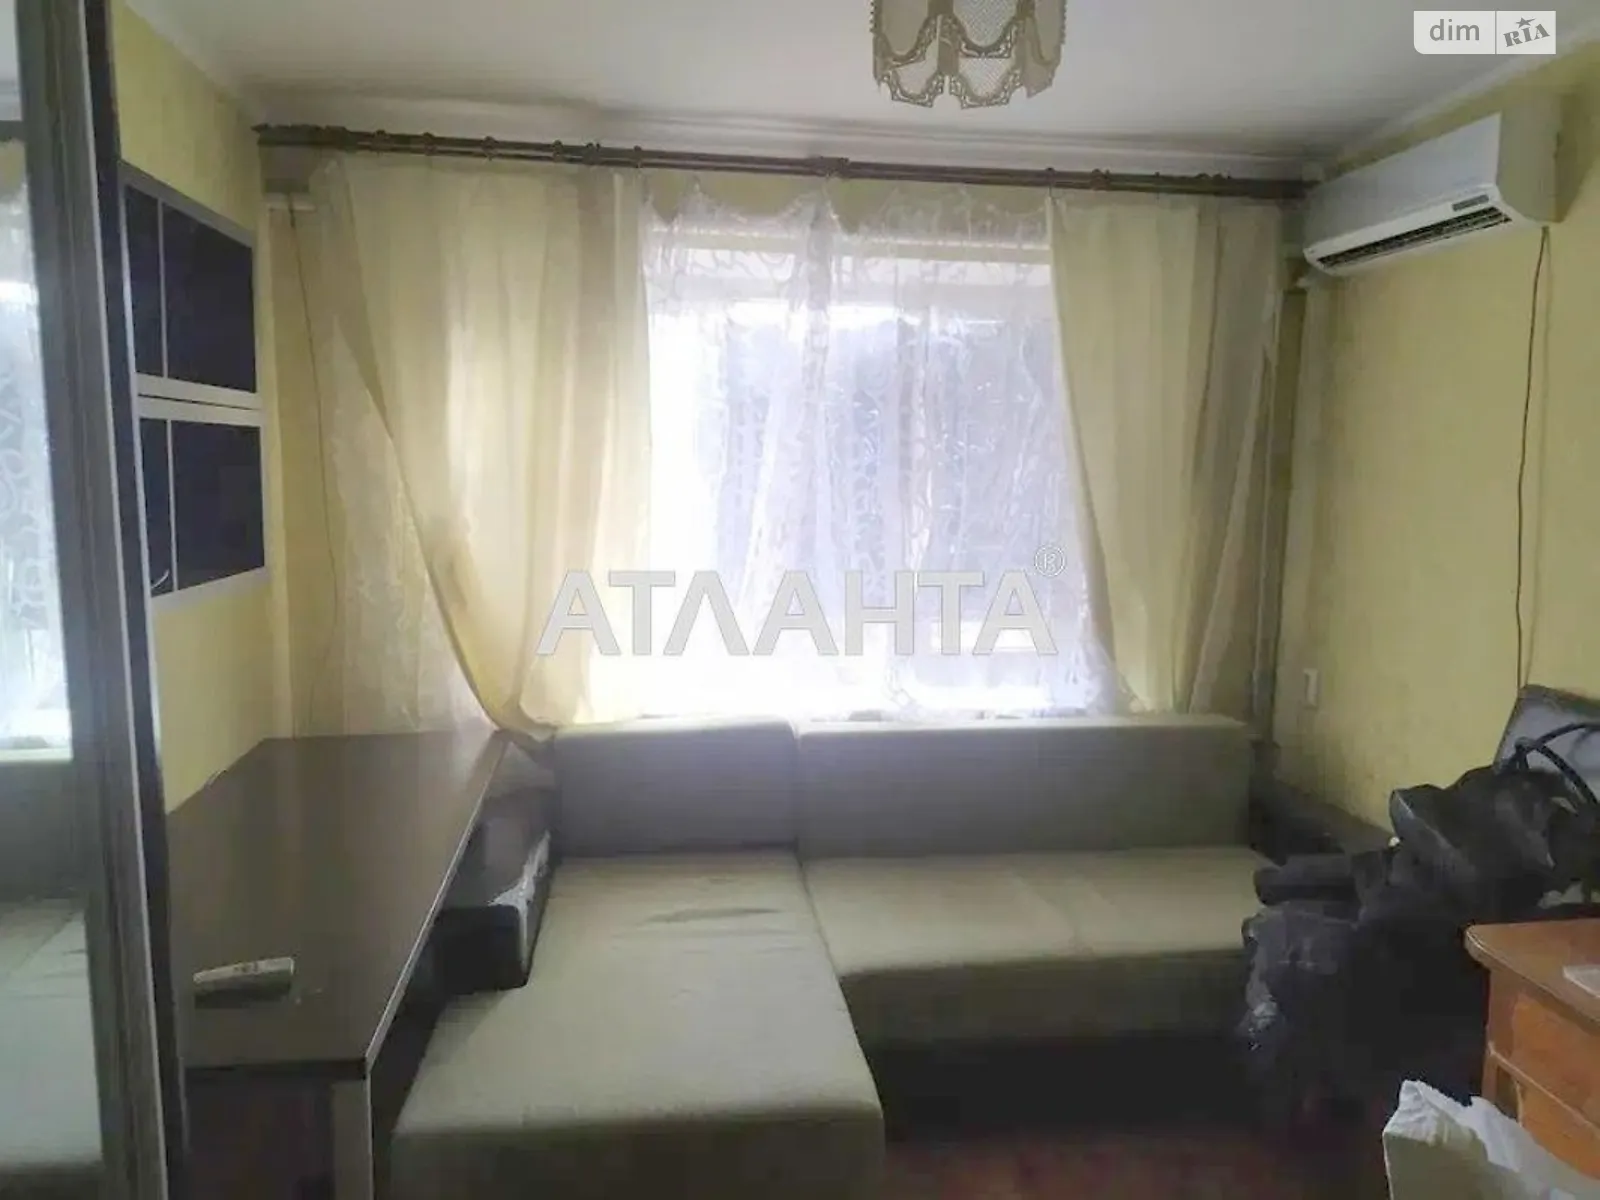 Продается комната 13 кв. м в Одессе, цена: 7500 $ - фото 1